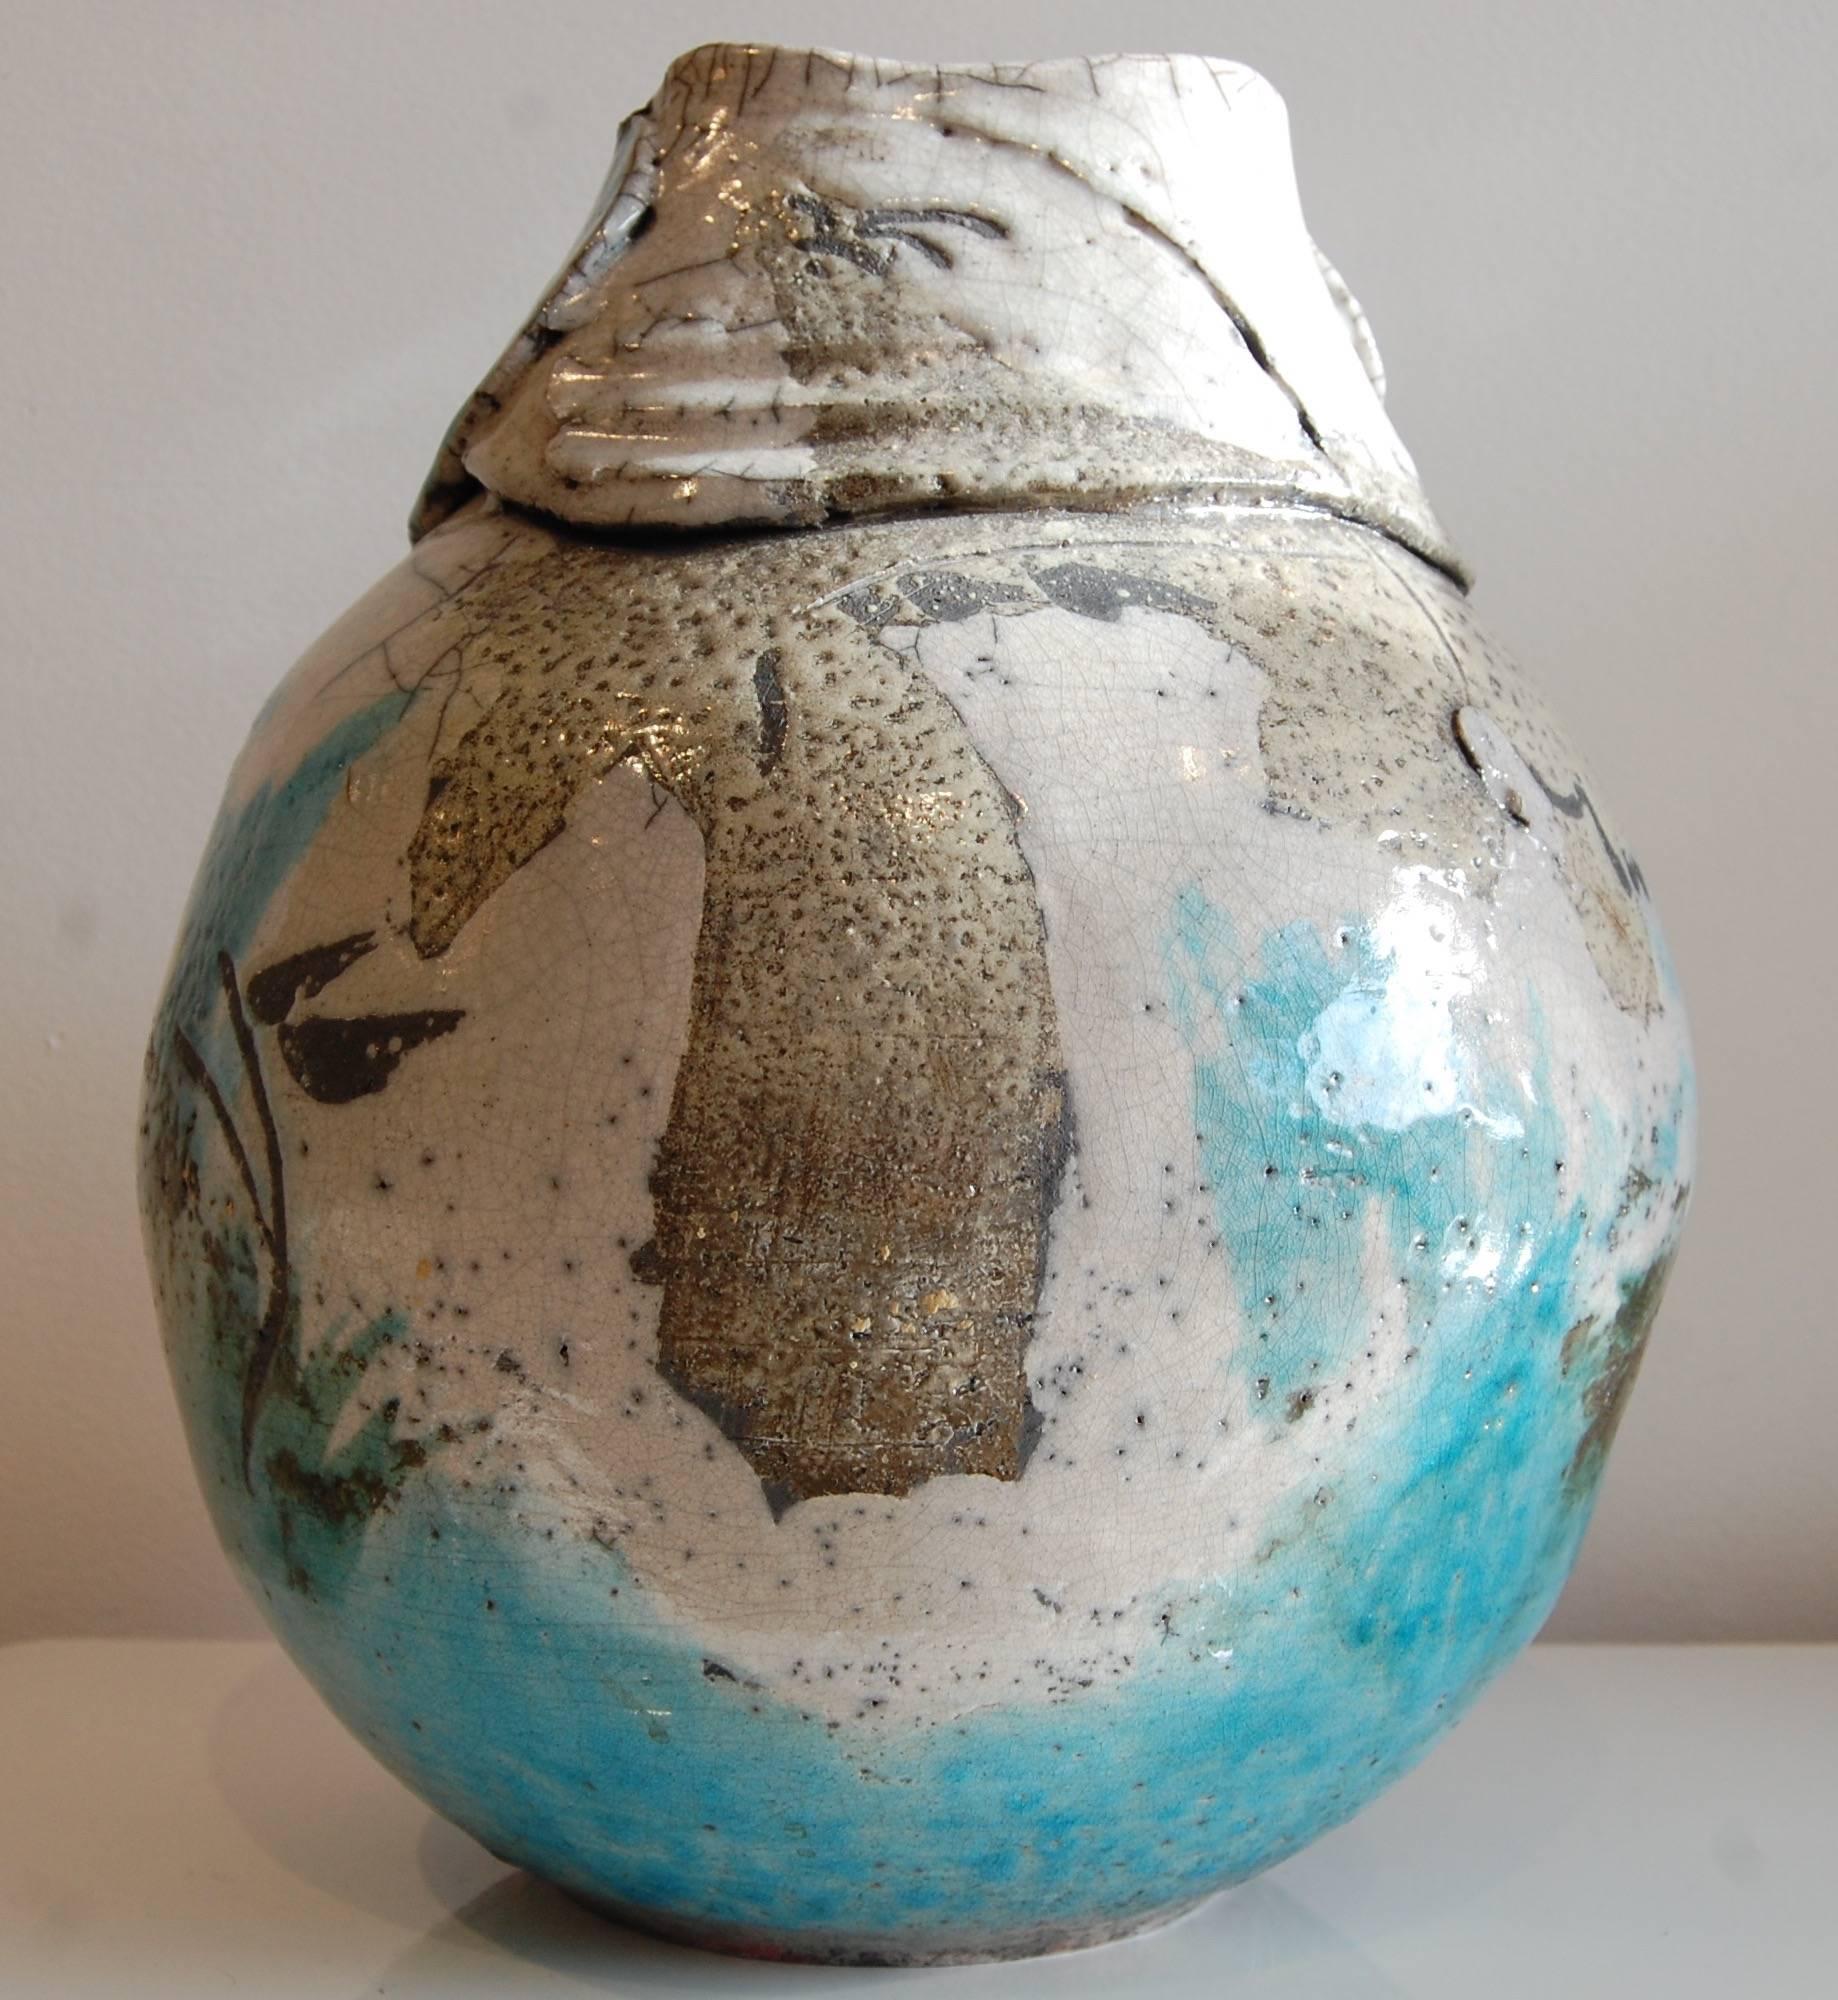 Raku Ceramic Vase - Abstract Expressionist Sculpture by Jose Antonio Sarmiento